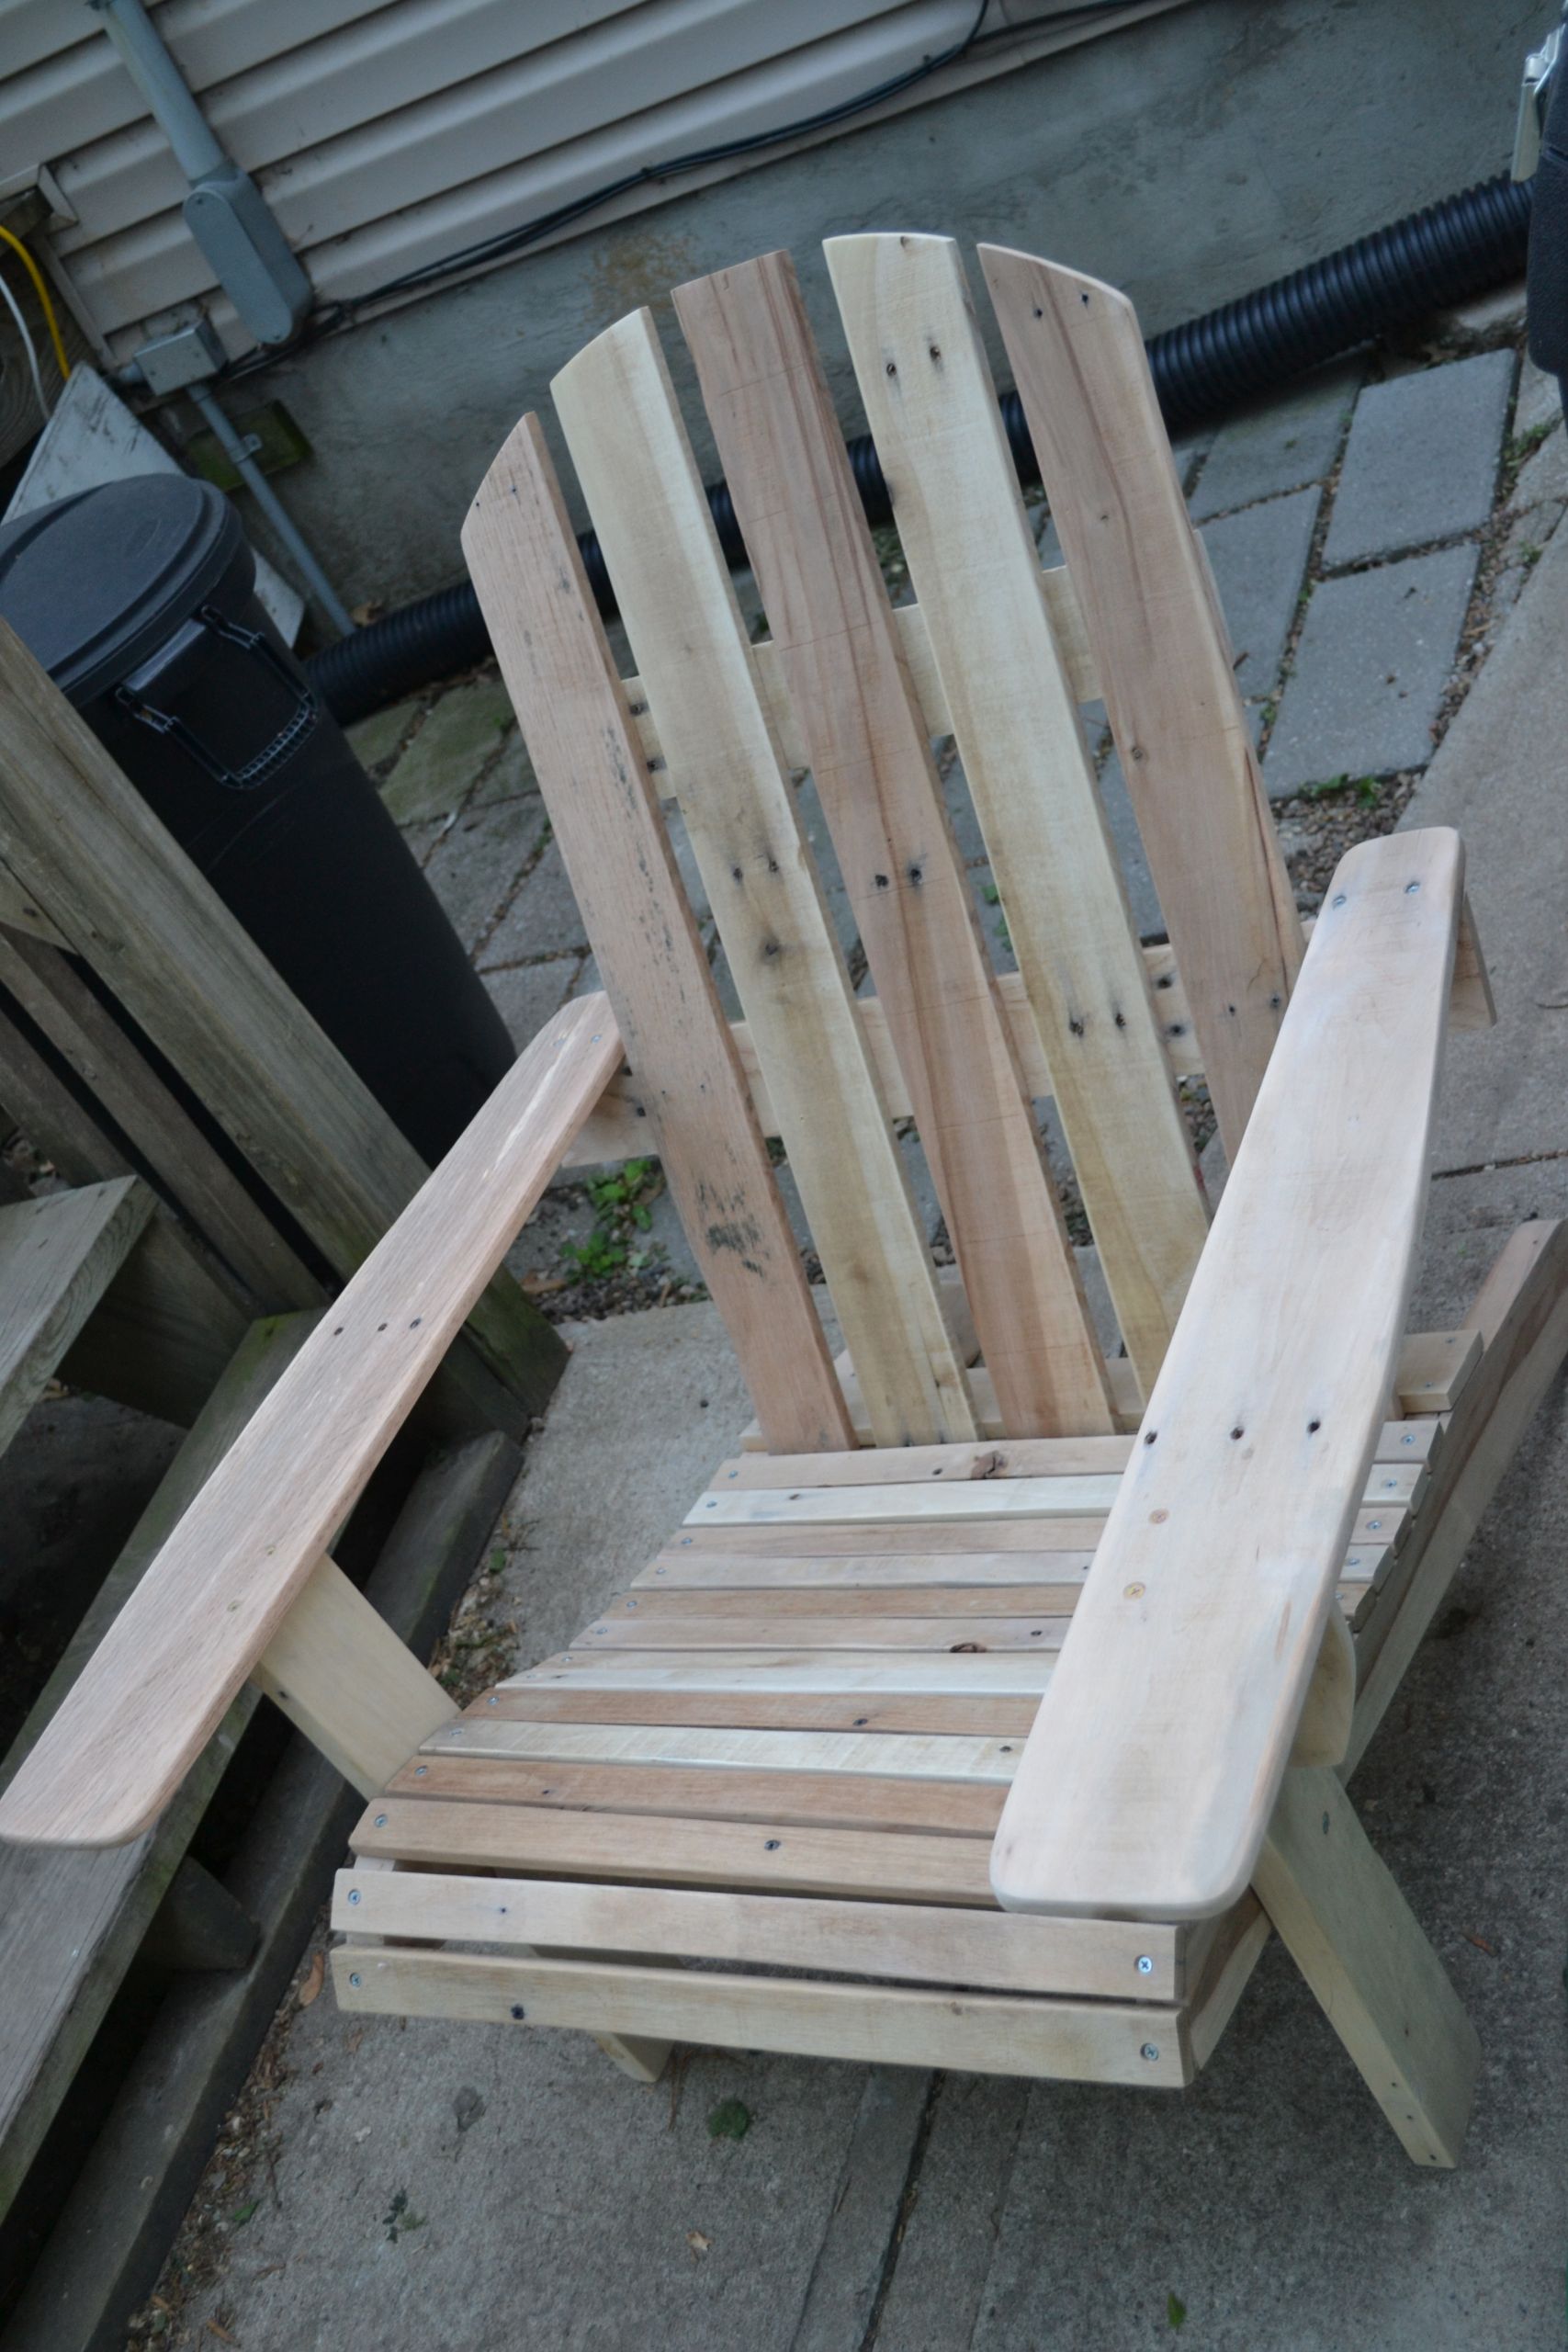 DIY Chair Plans
 Diy Pallet Adirondack Chair Plans Wooden PDF birdhouse